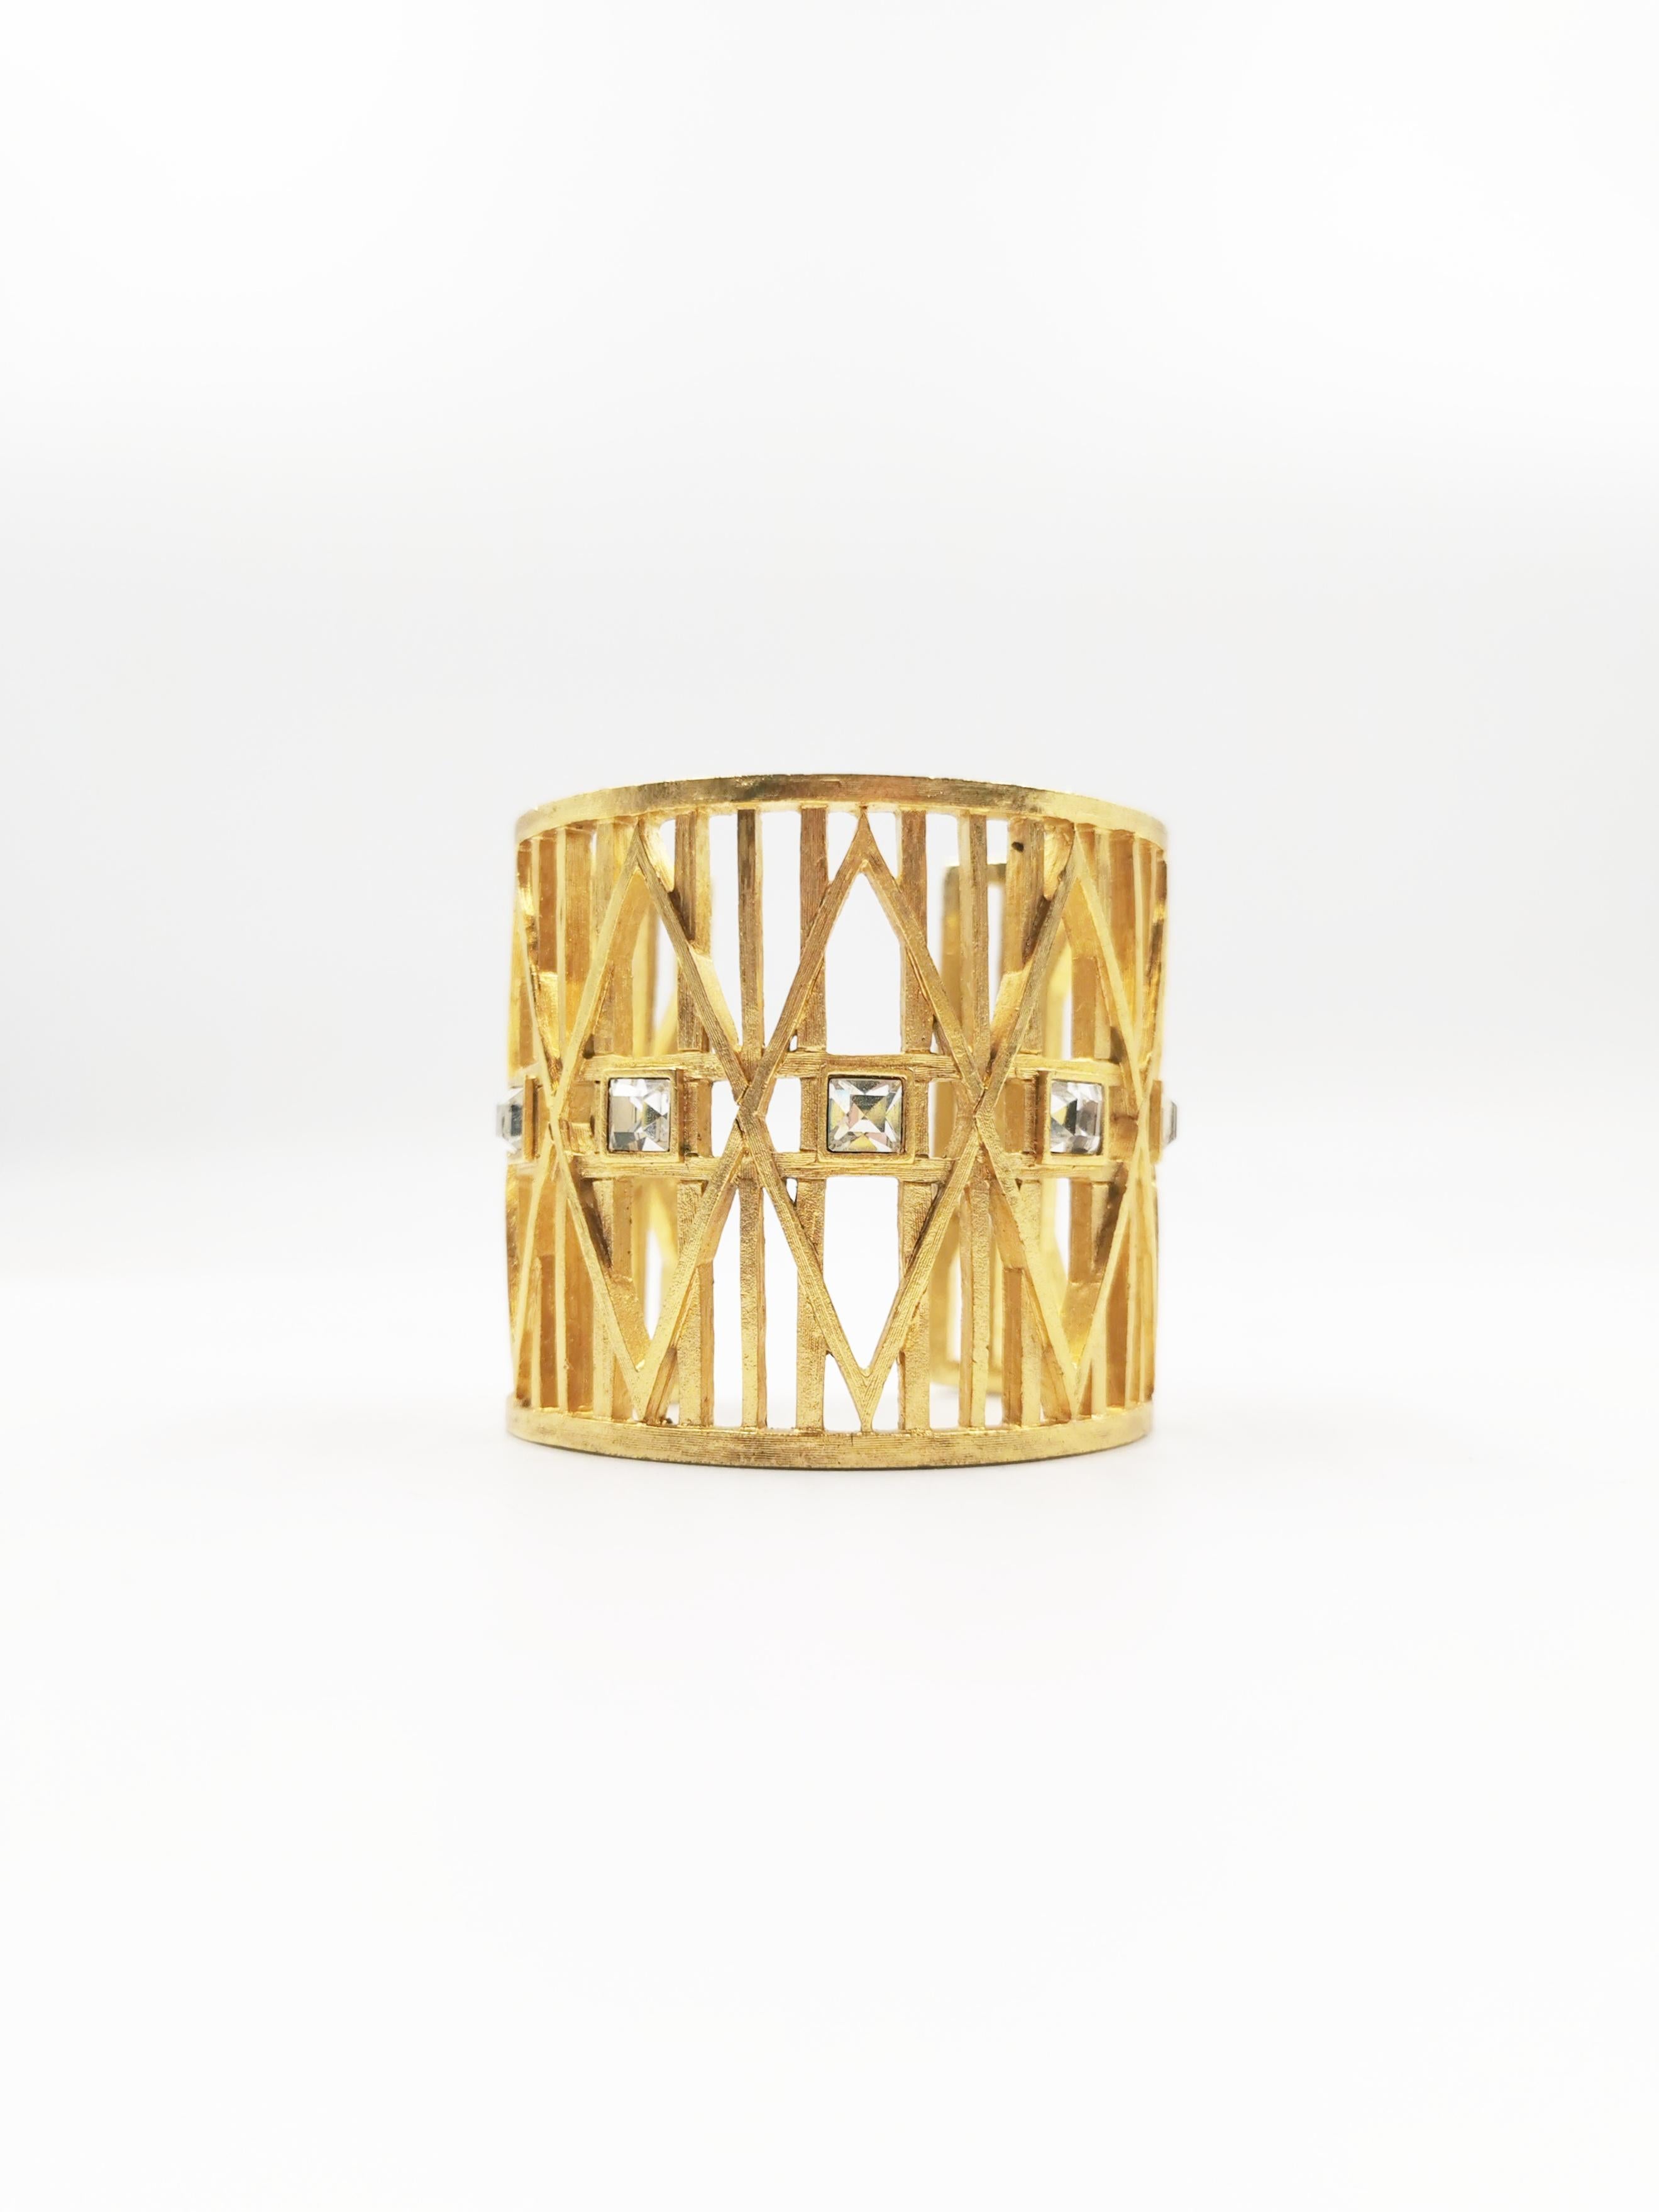 Etruscan Revival Givenchy 1980'S Gold Cuff Rhinestones Wide Bracelet Bangle Vintage For Sale